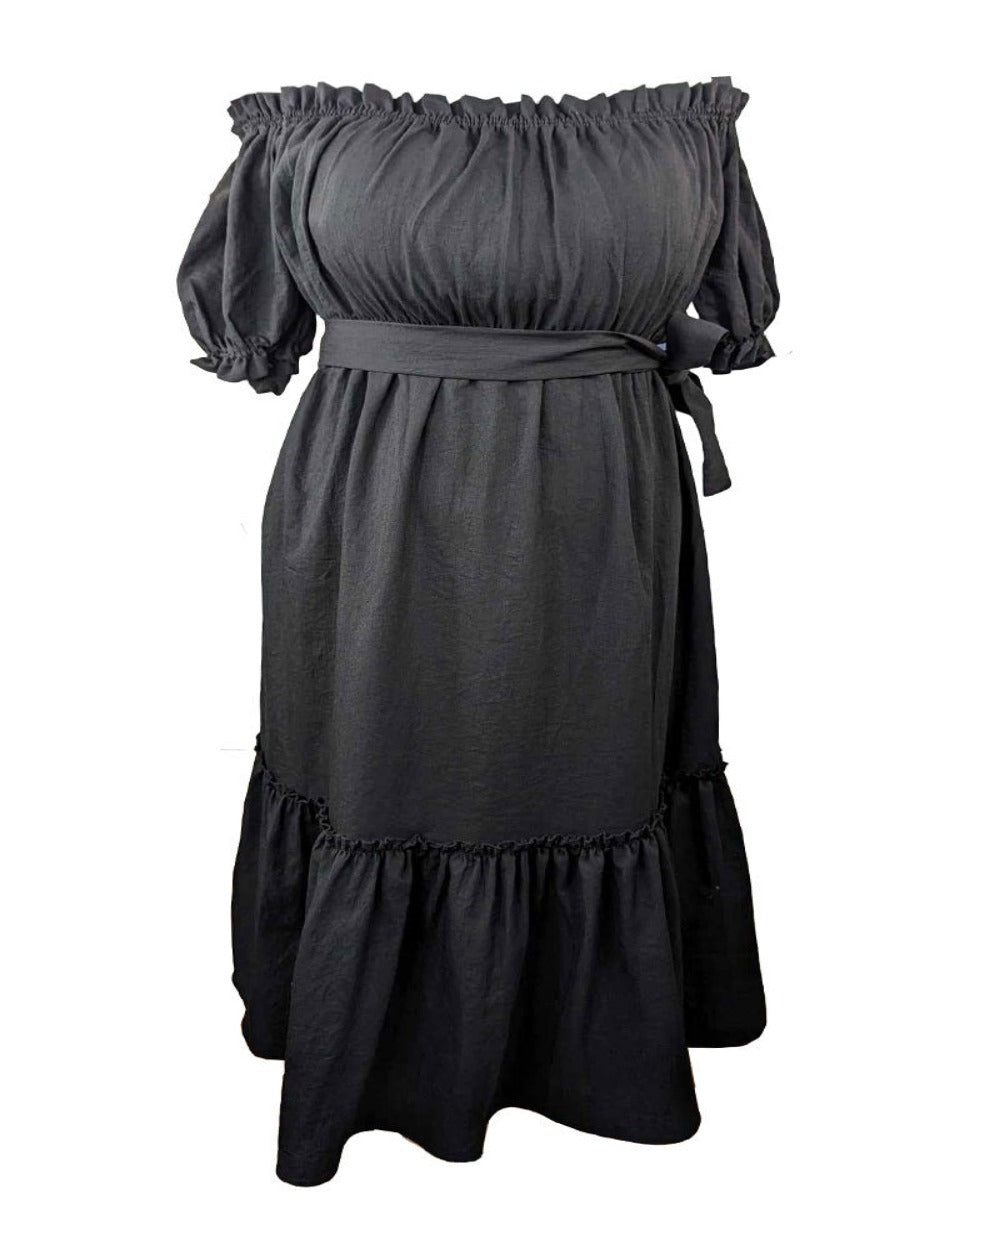 NEW Women's black off shoulder dress for spring-summer, with pockets, Perth, Au